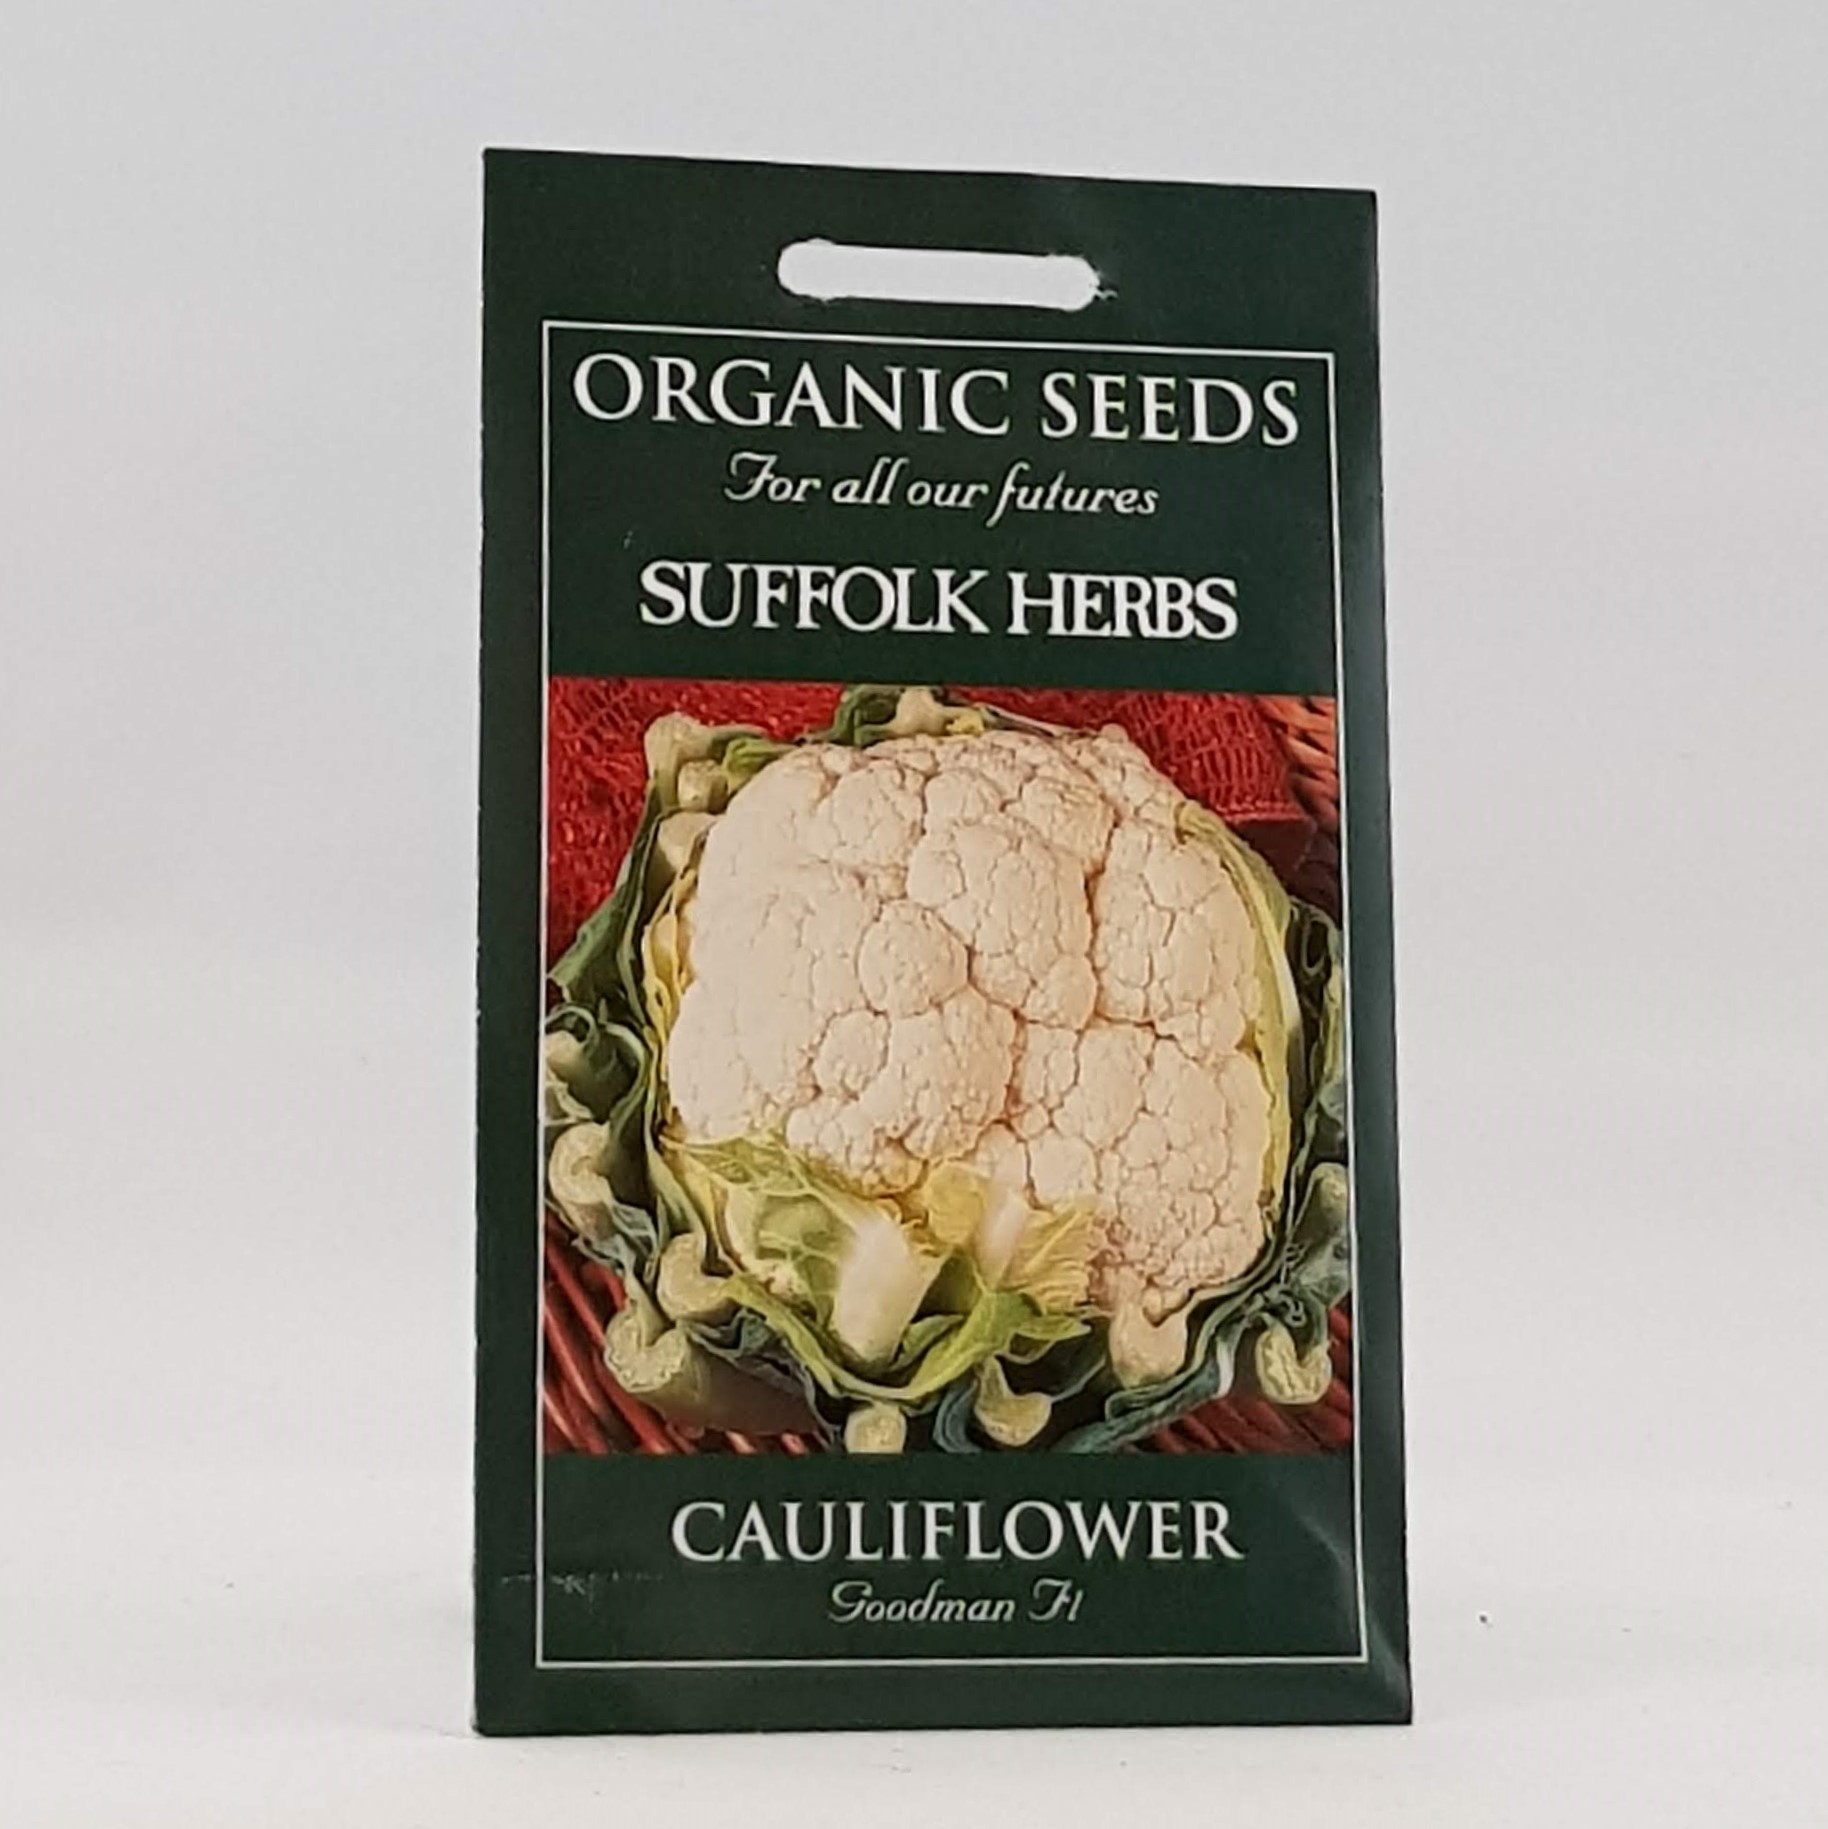 Cauliflower Goodman F1 Seeds, Organic